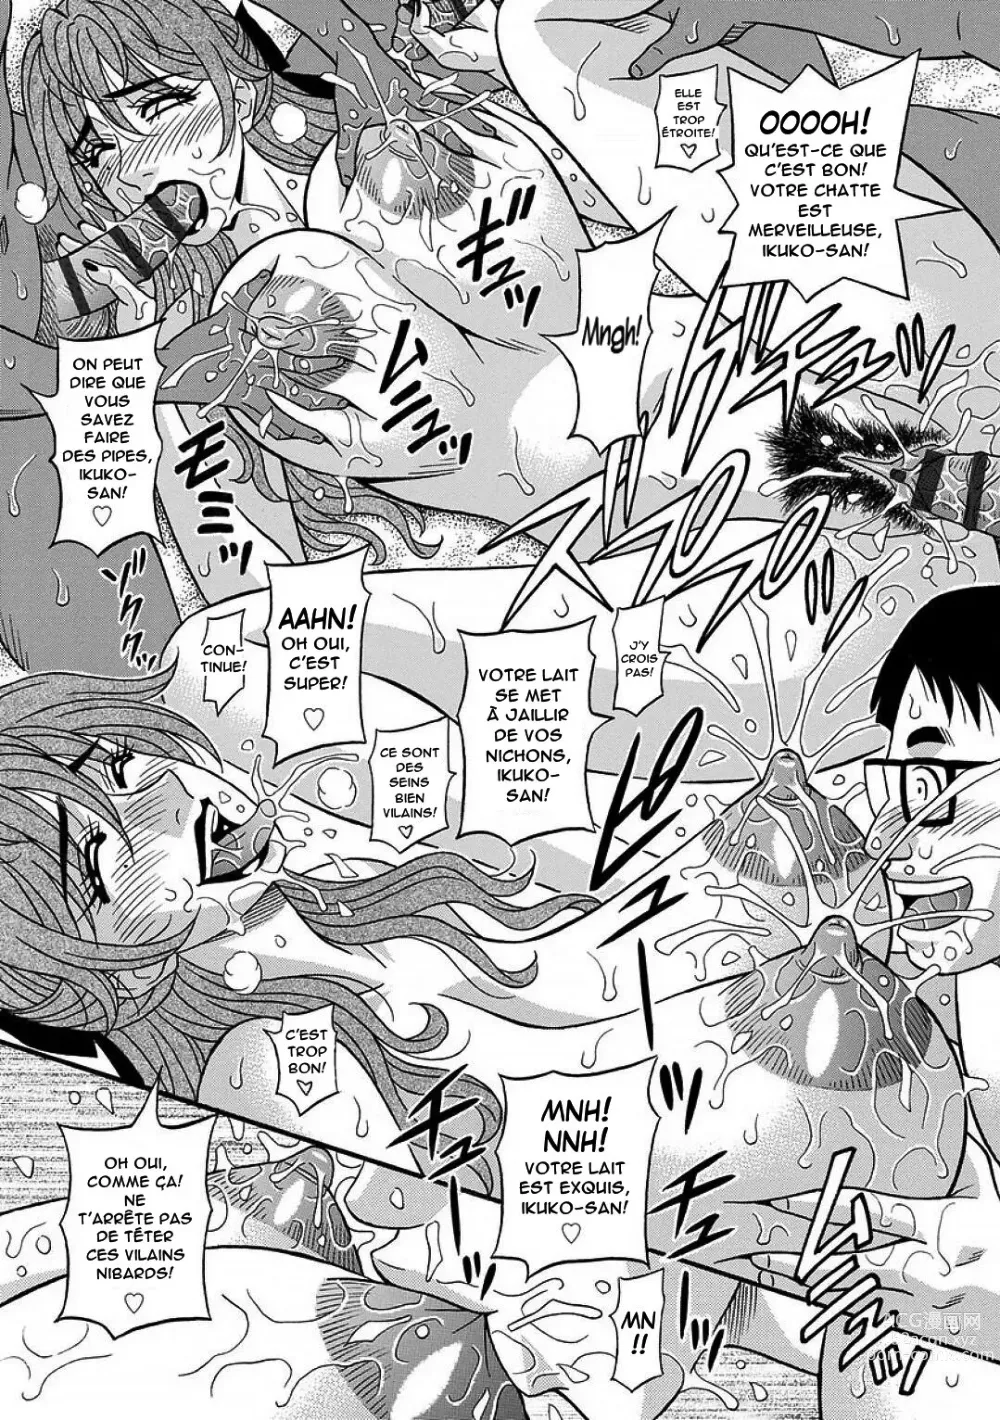 Page 181 of manga Hitozuma Seiyuu Ikuko-san